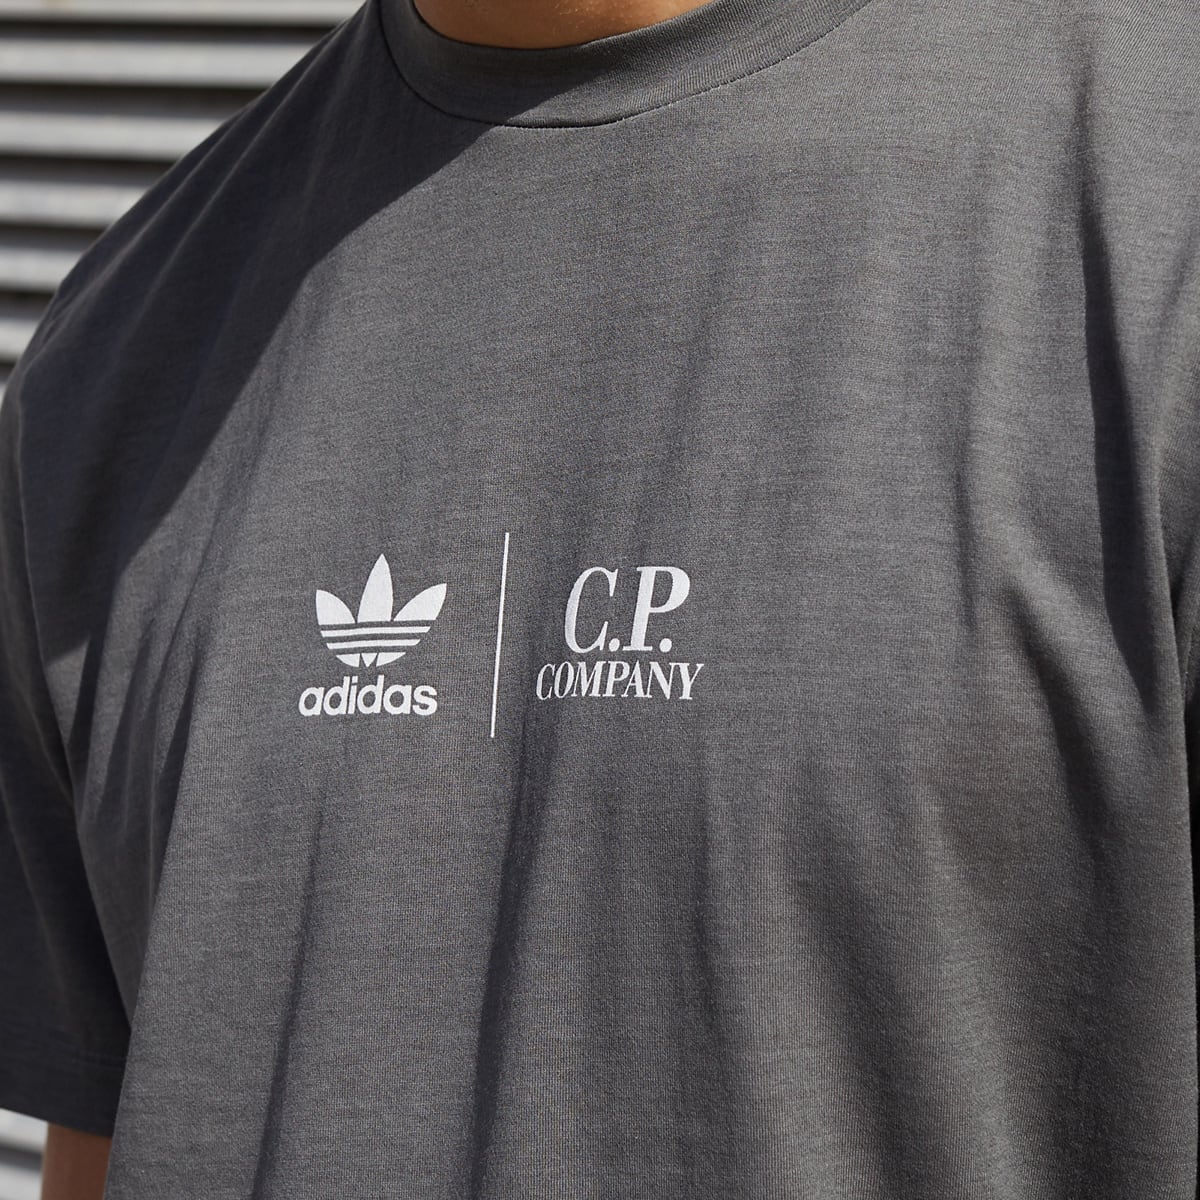 cp company x adidas t shirt